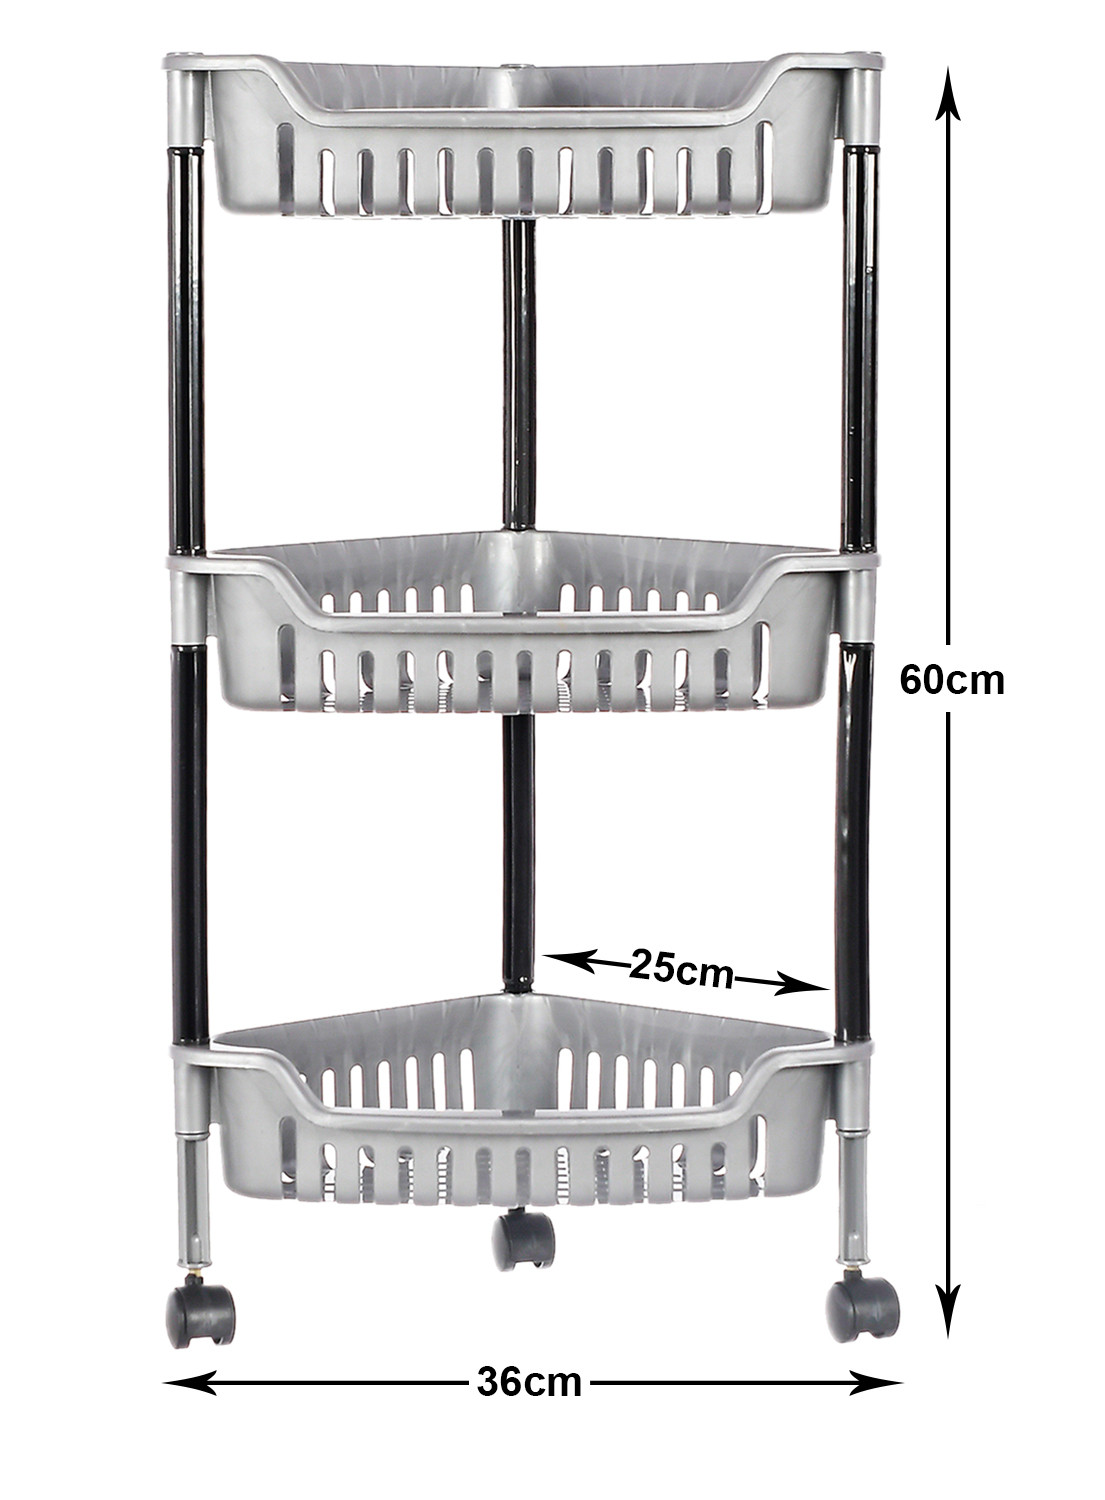 Kuber Industries Plastic 3-Tier Triangle Storage Rack Shelf for Kitchen,Living Room,Bathroom, Office (Grey) -46KM0553